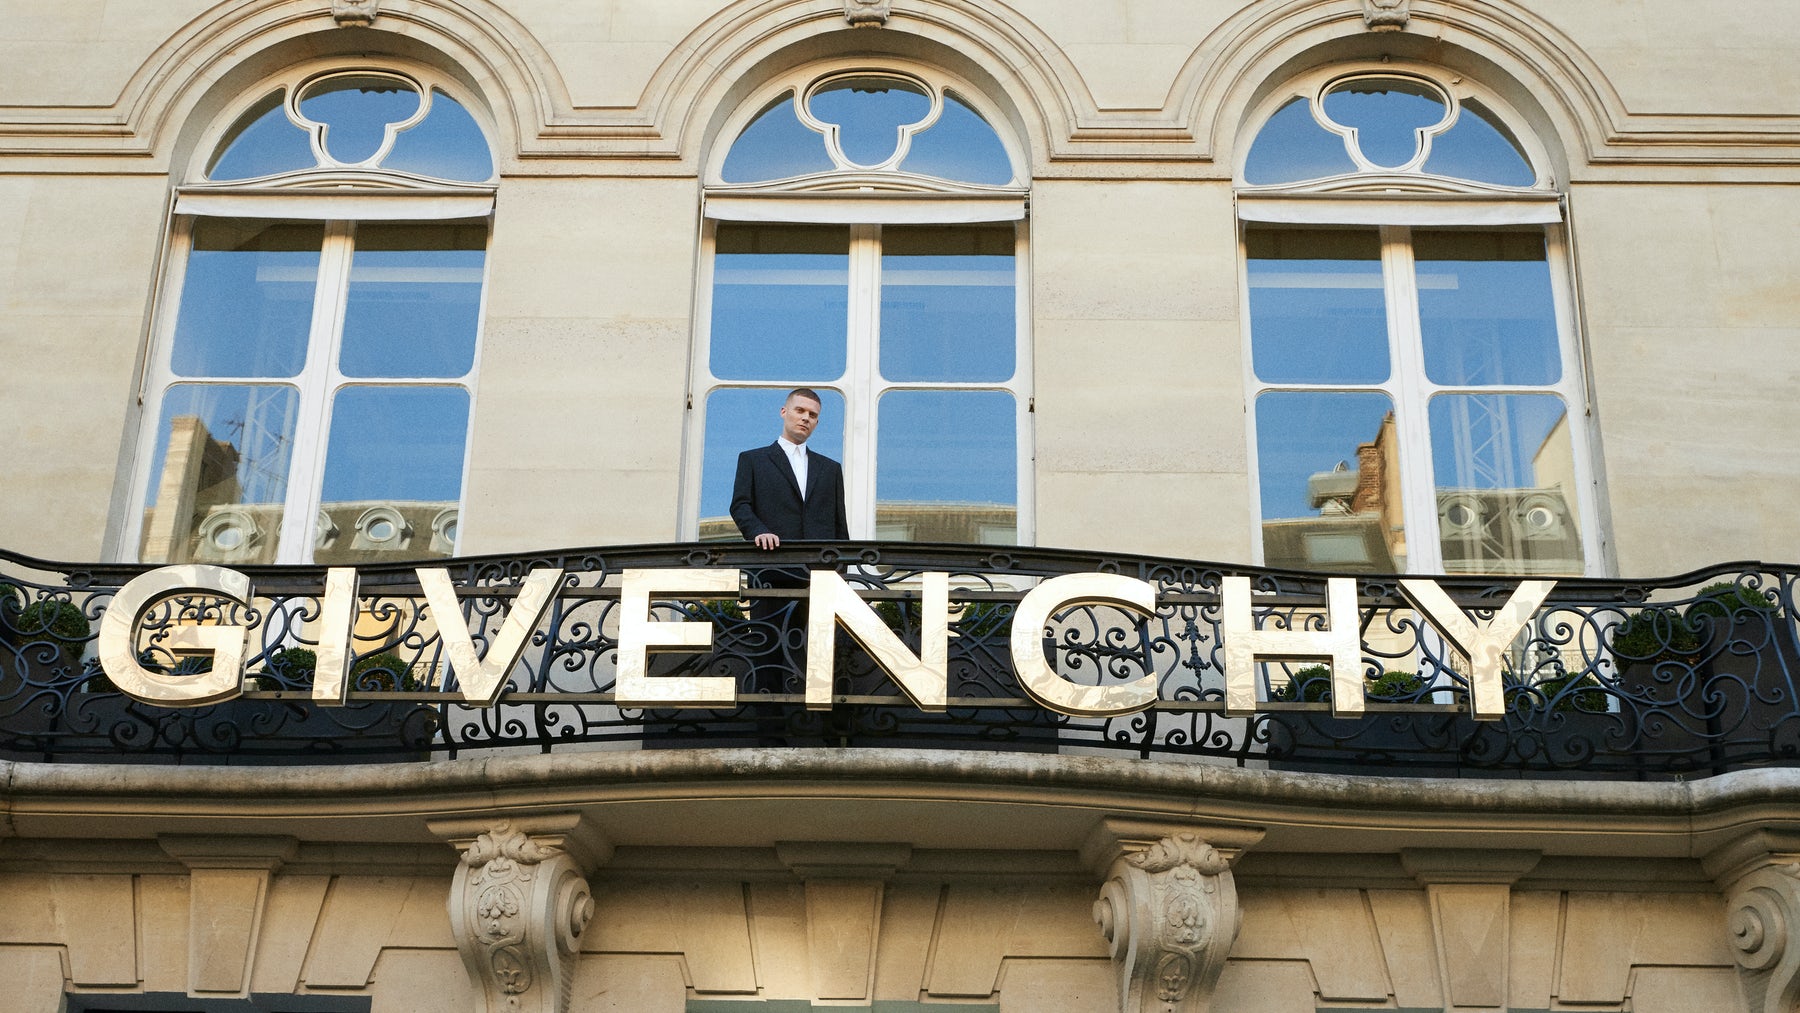 Givenchy Names Matthew Williams as New Creative Director - FASHION Magazine